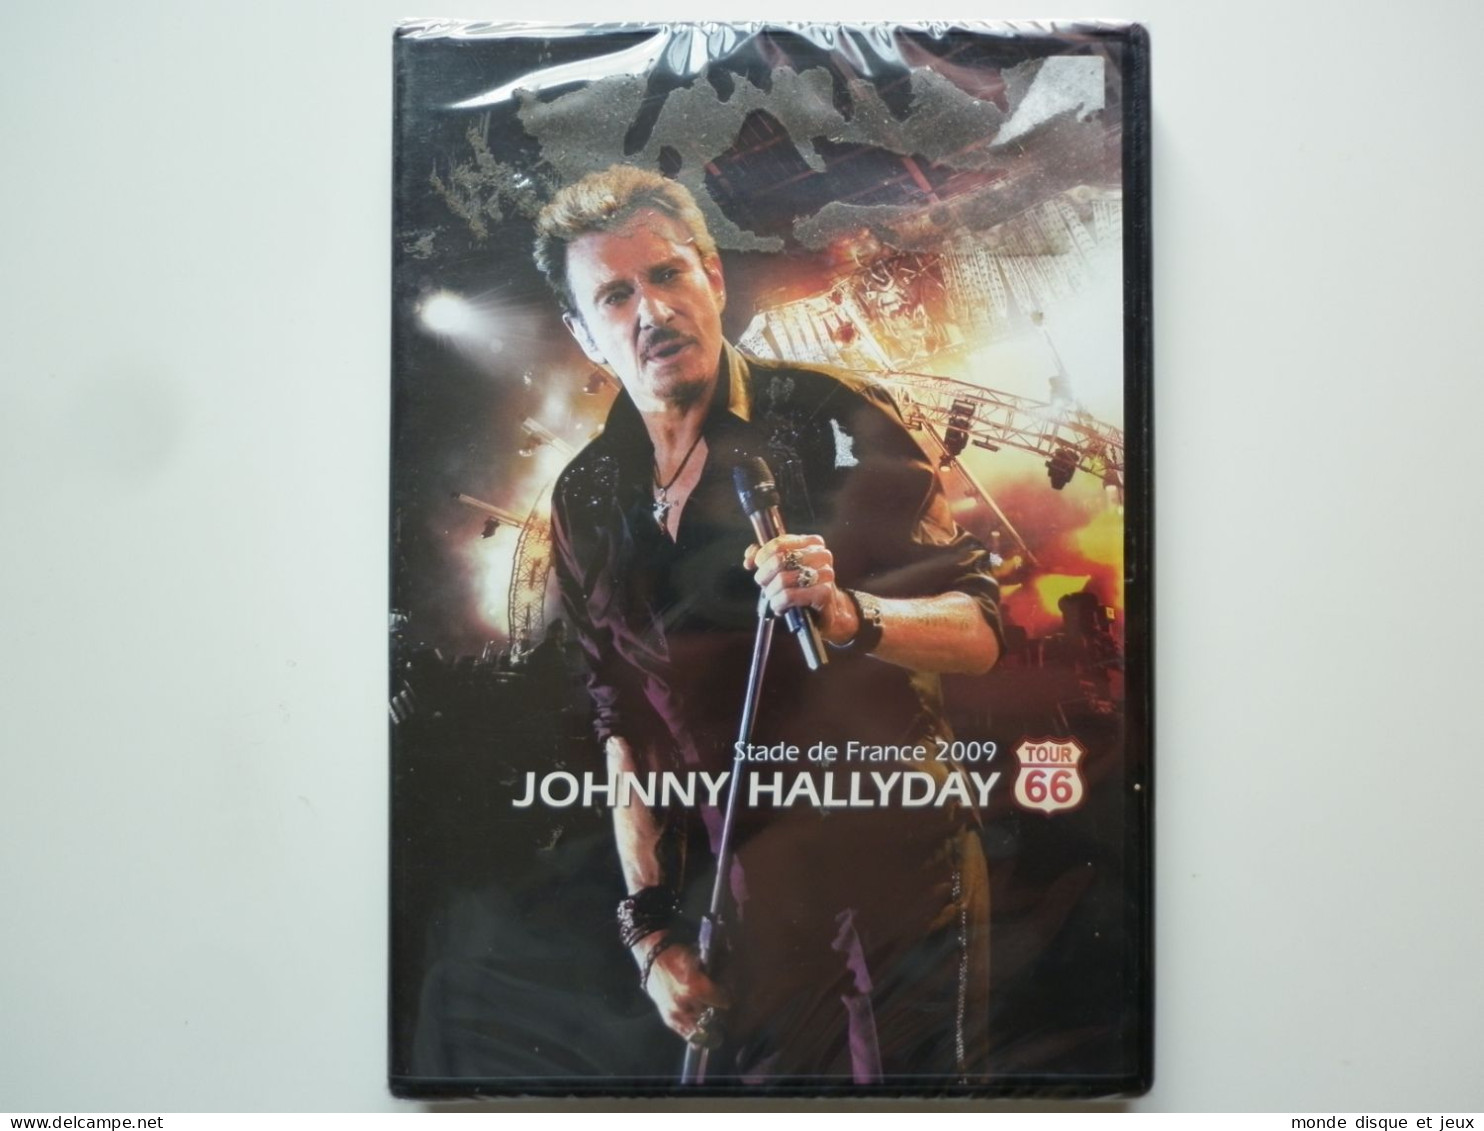 Johnny Hallyday Dvd Stade De France 2009 Tour 66 - DVD Musicales